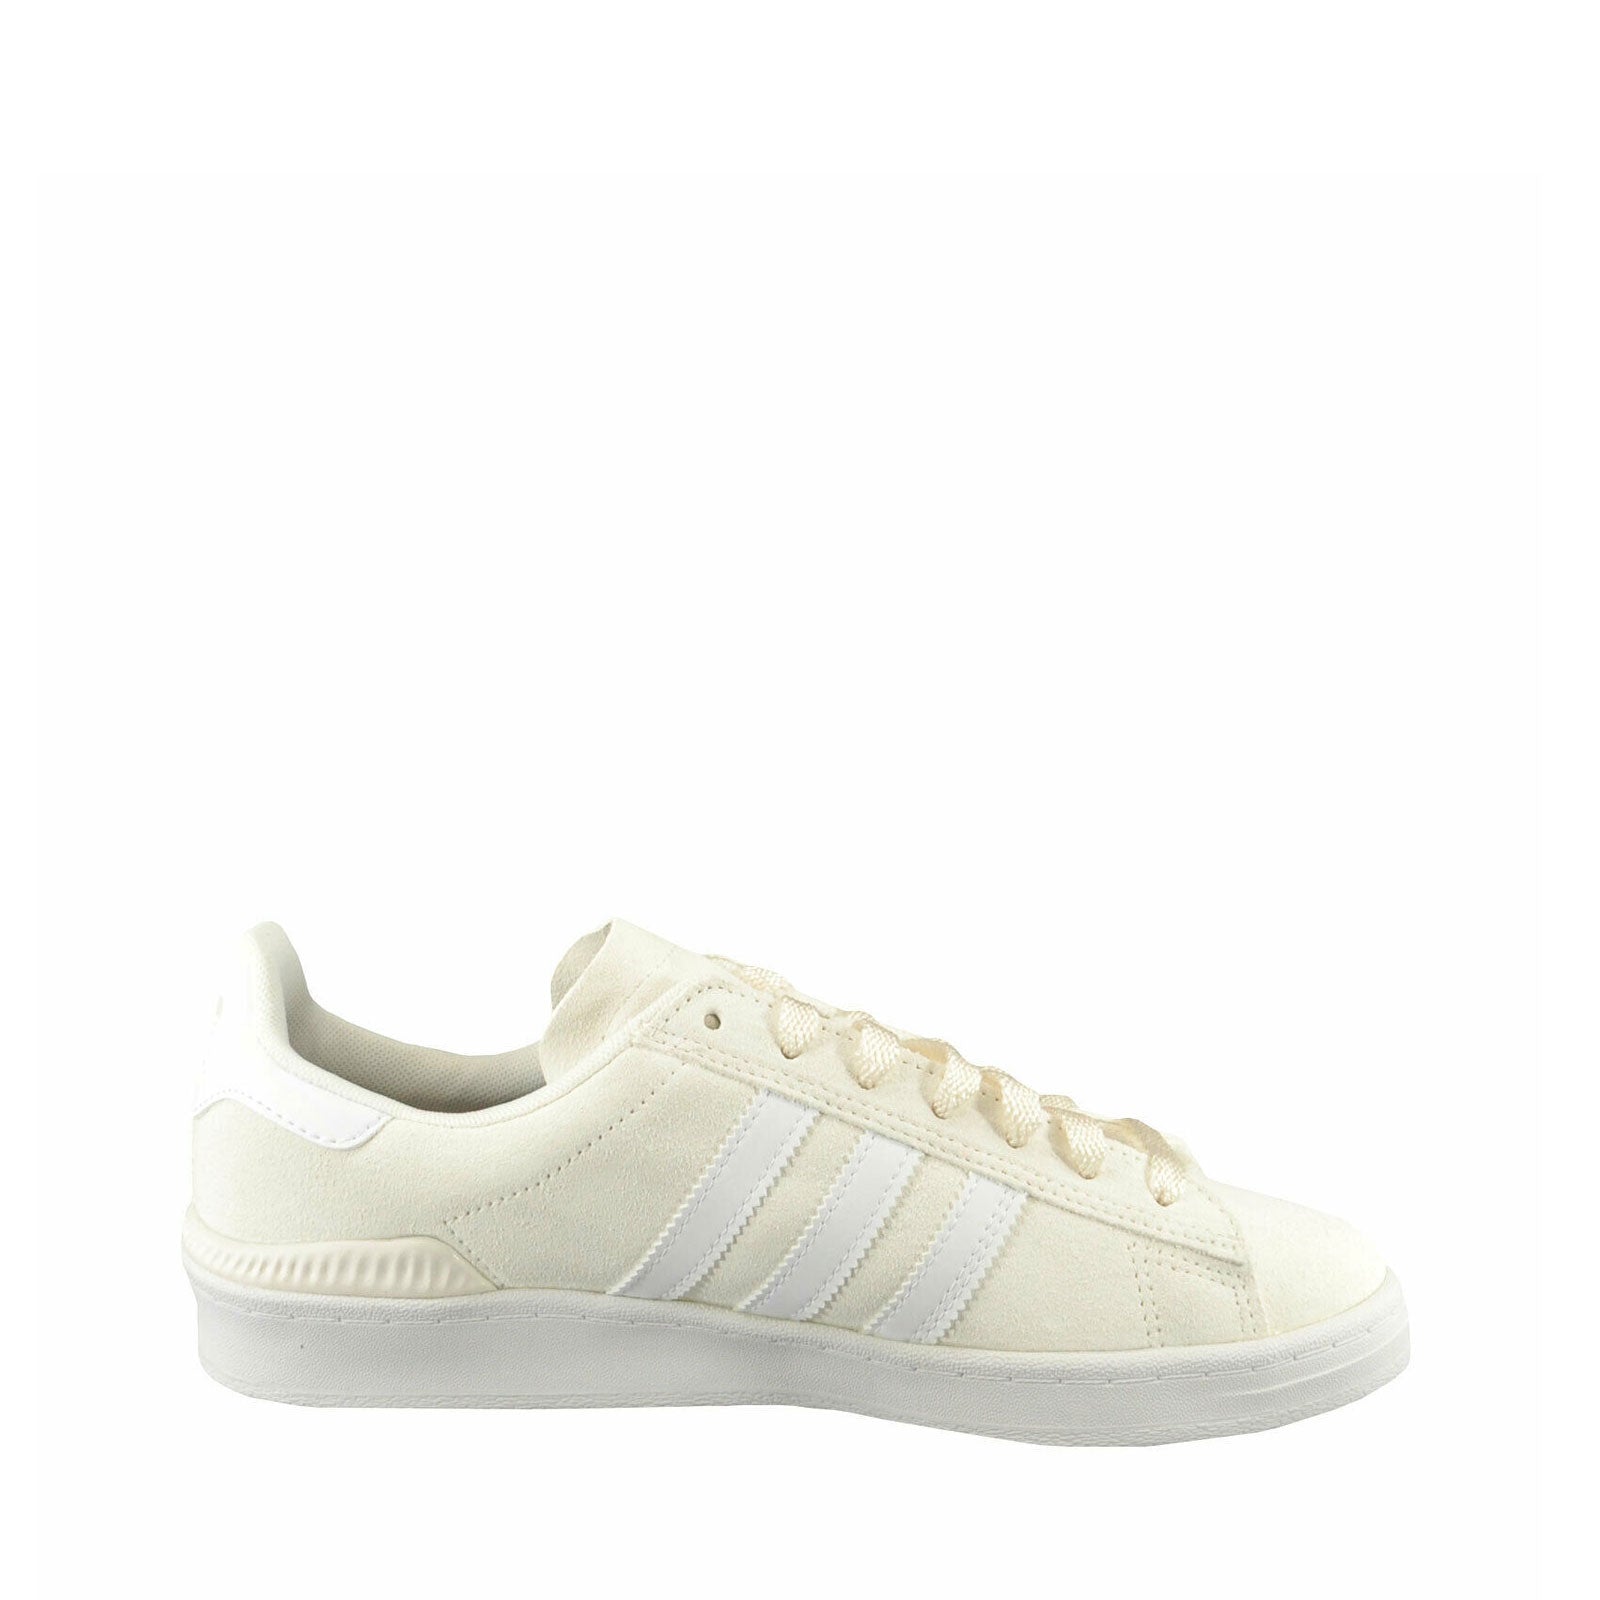 Adidas Campus Adv EG8577 (Supplier Colour/Footwear White/Gold Metallic)